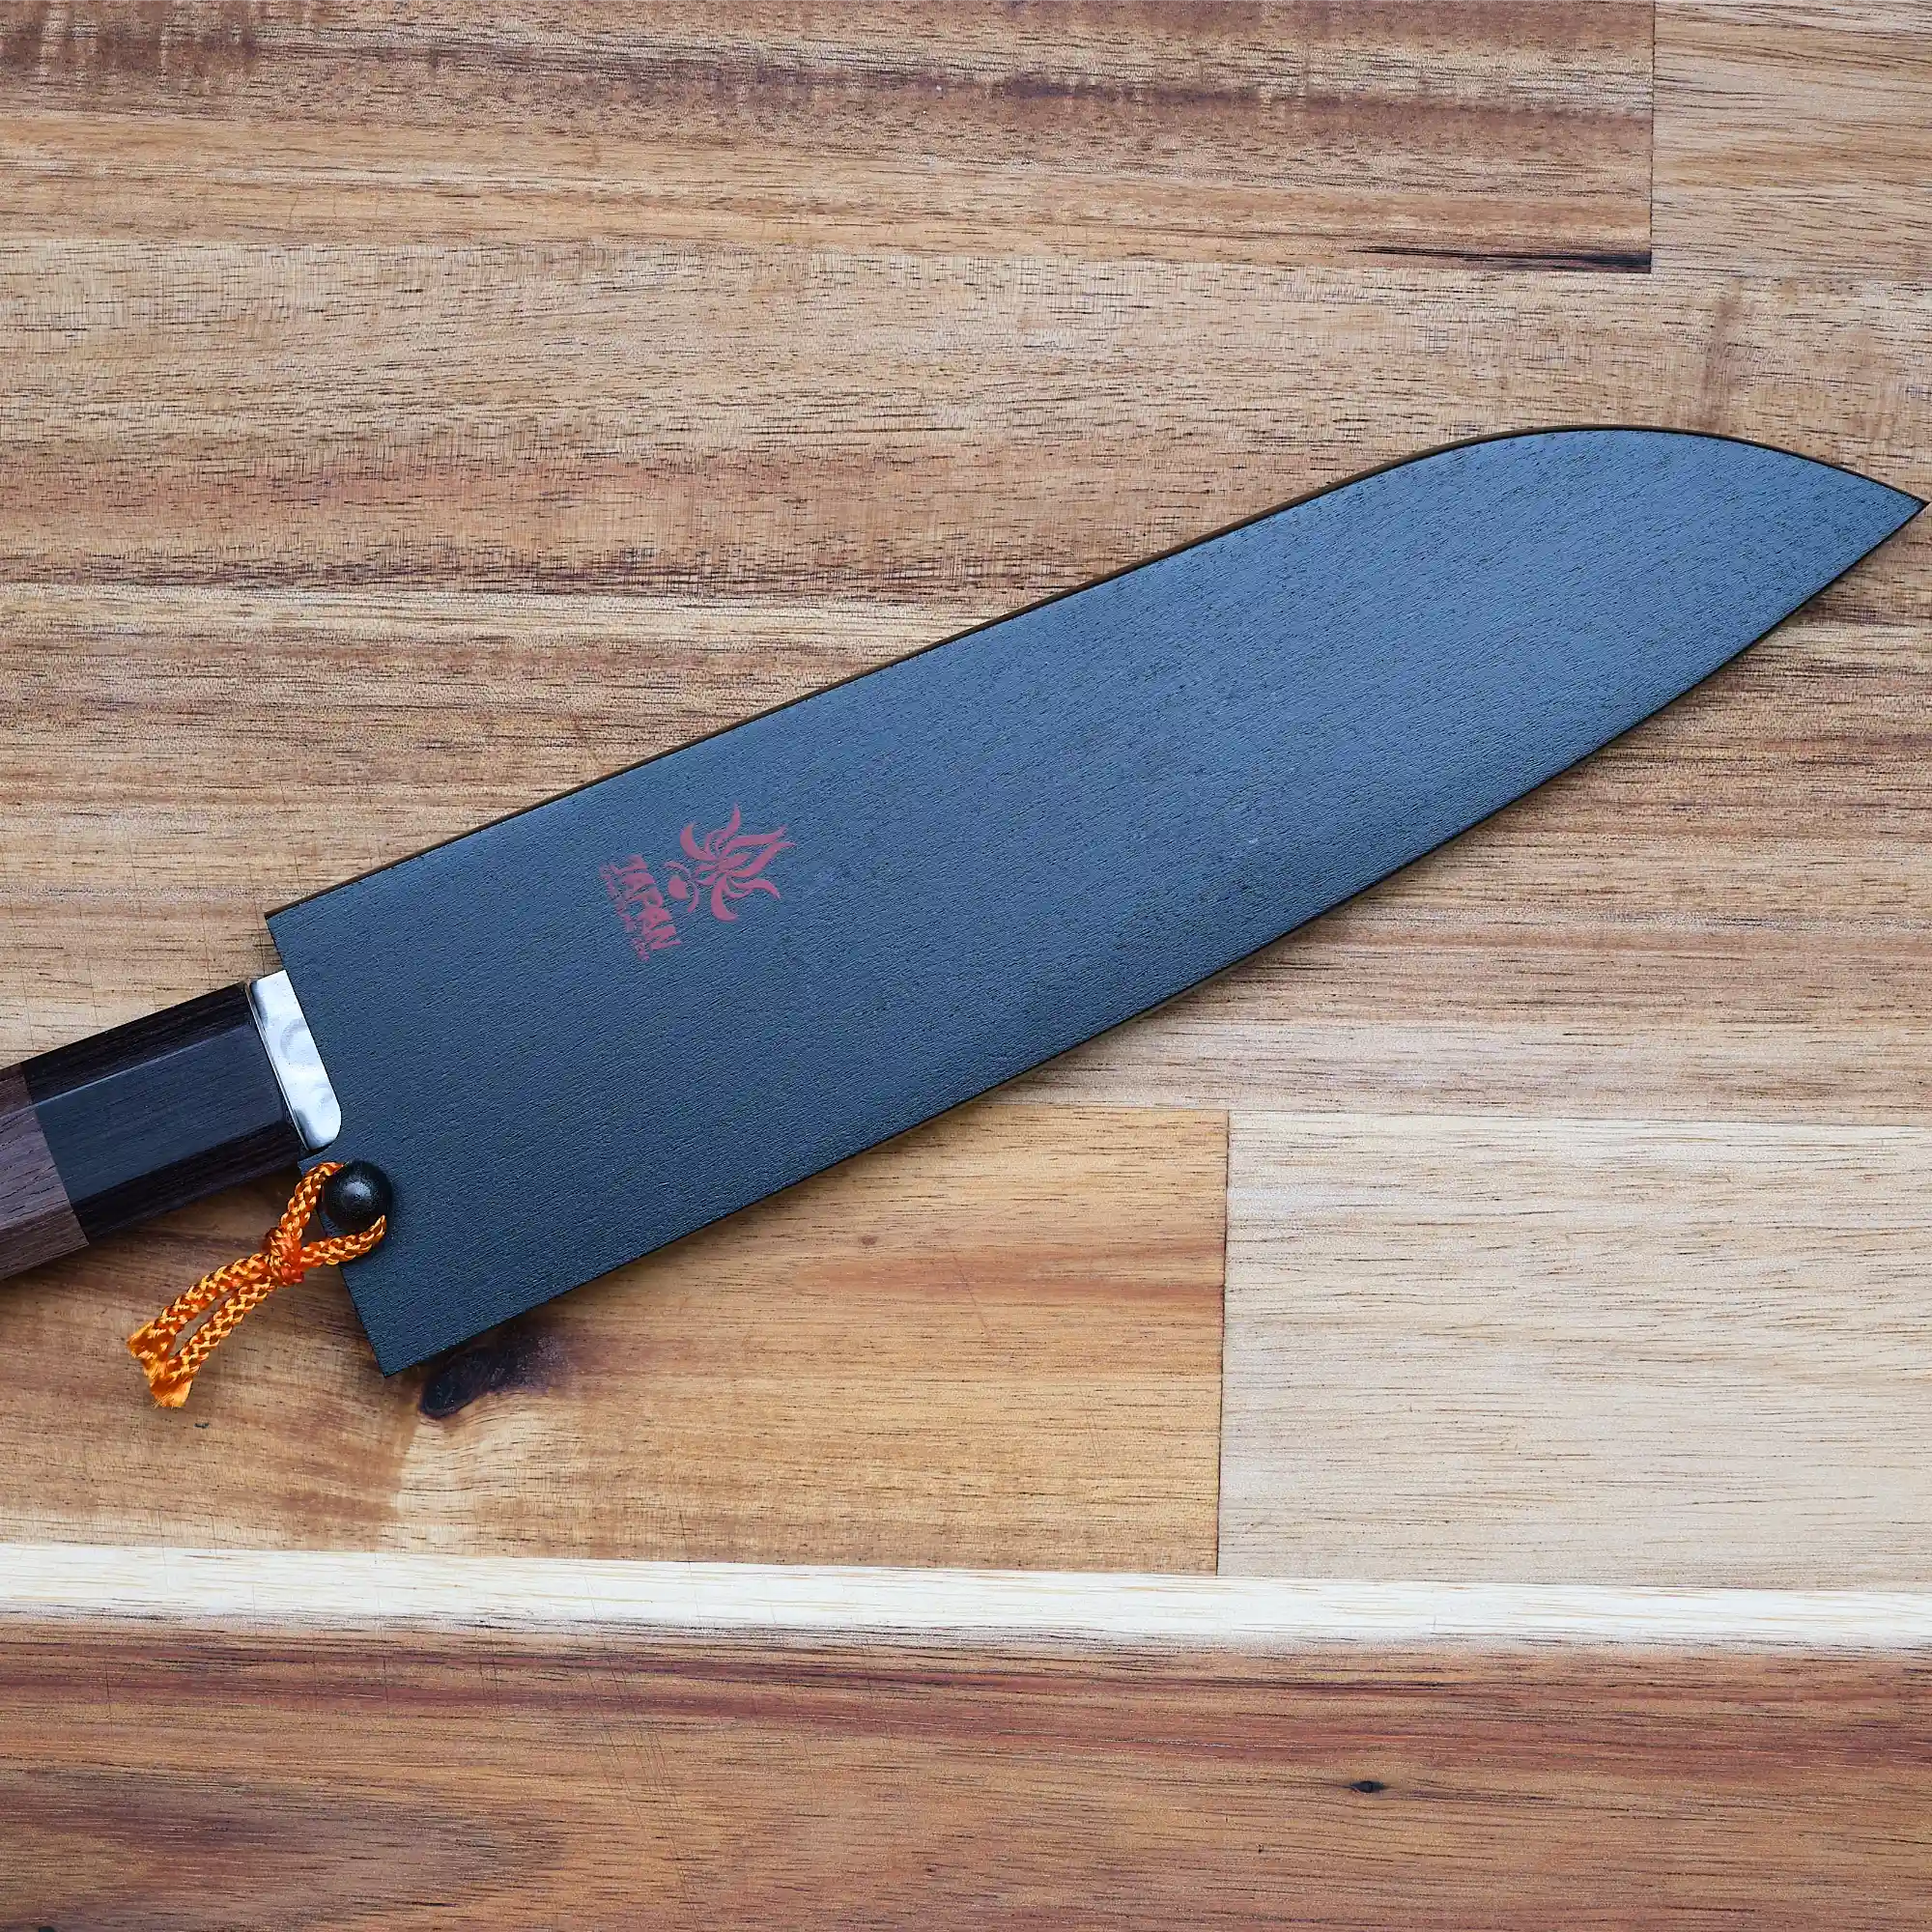 Sheath / Saya Ho Wood (Magnolia) - For Gyuto 180mm Knife